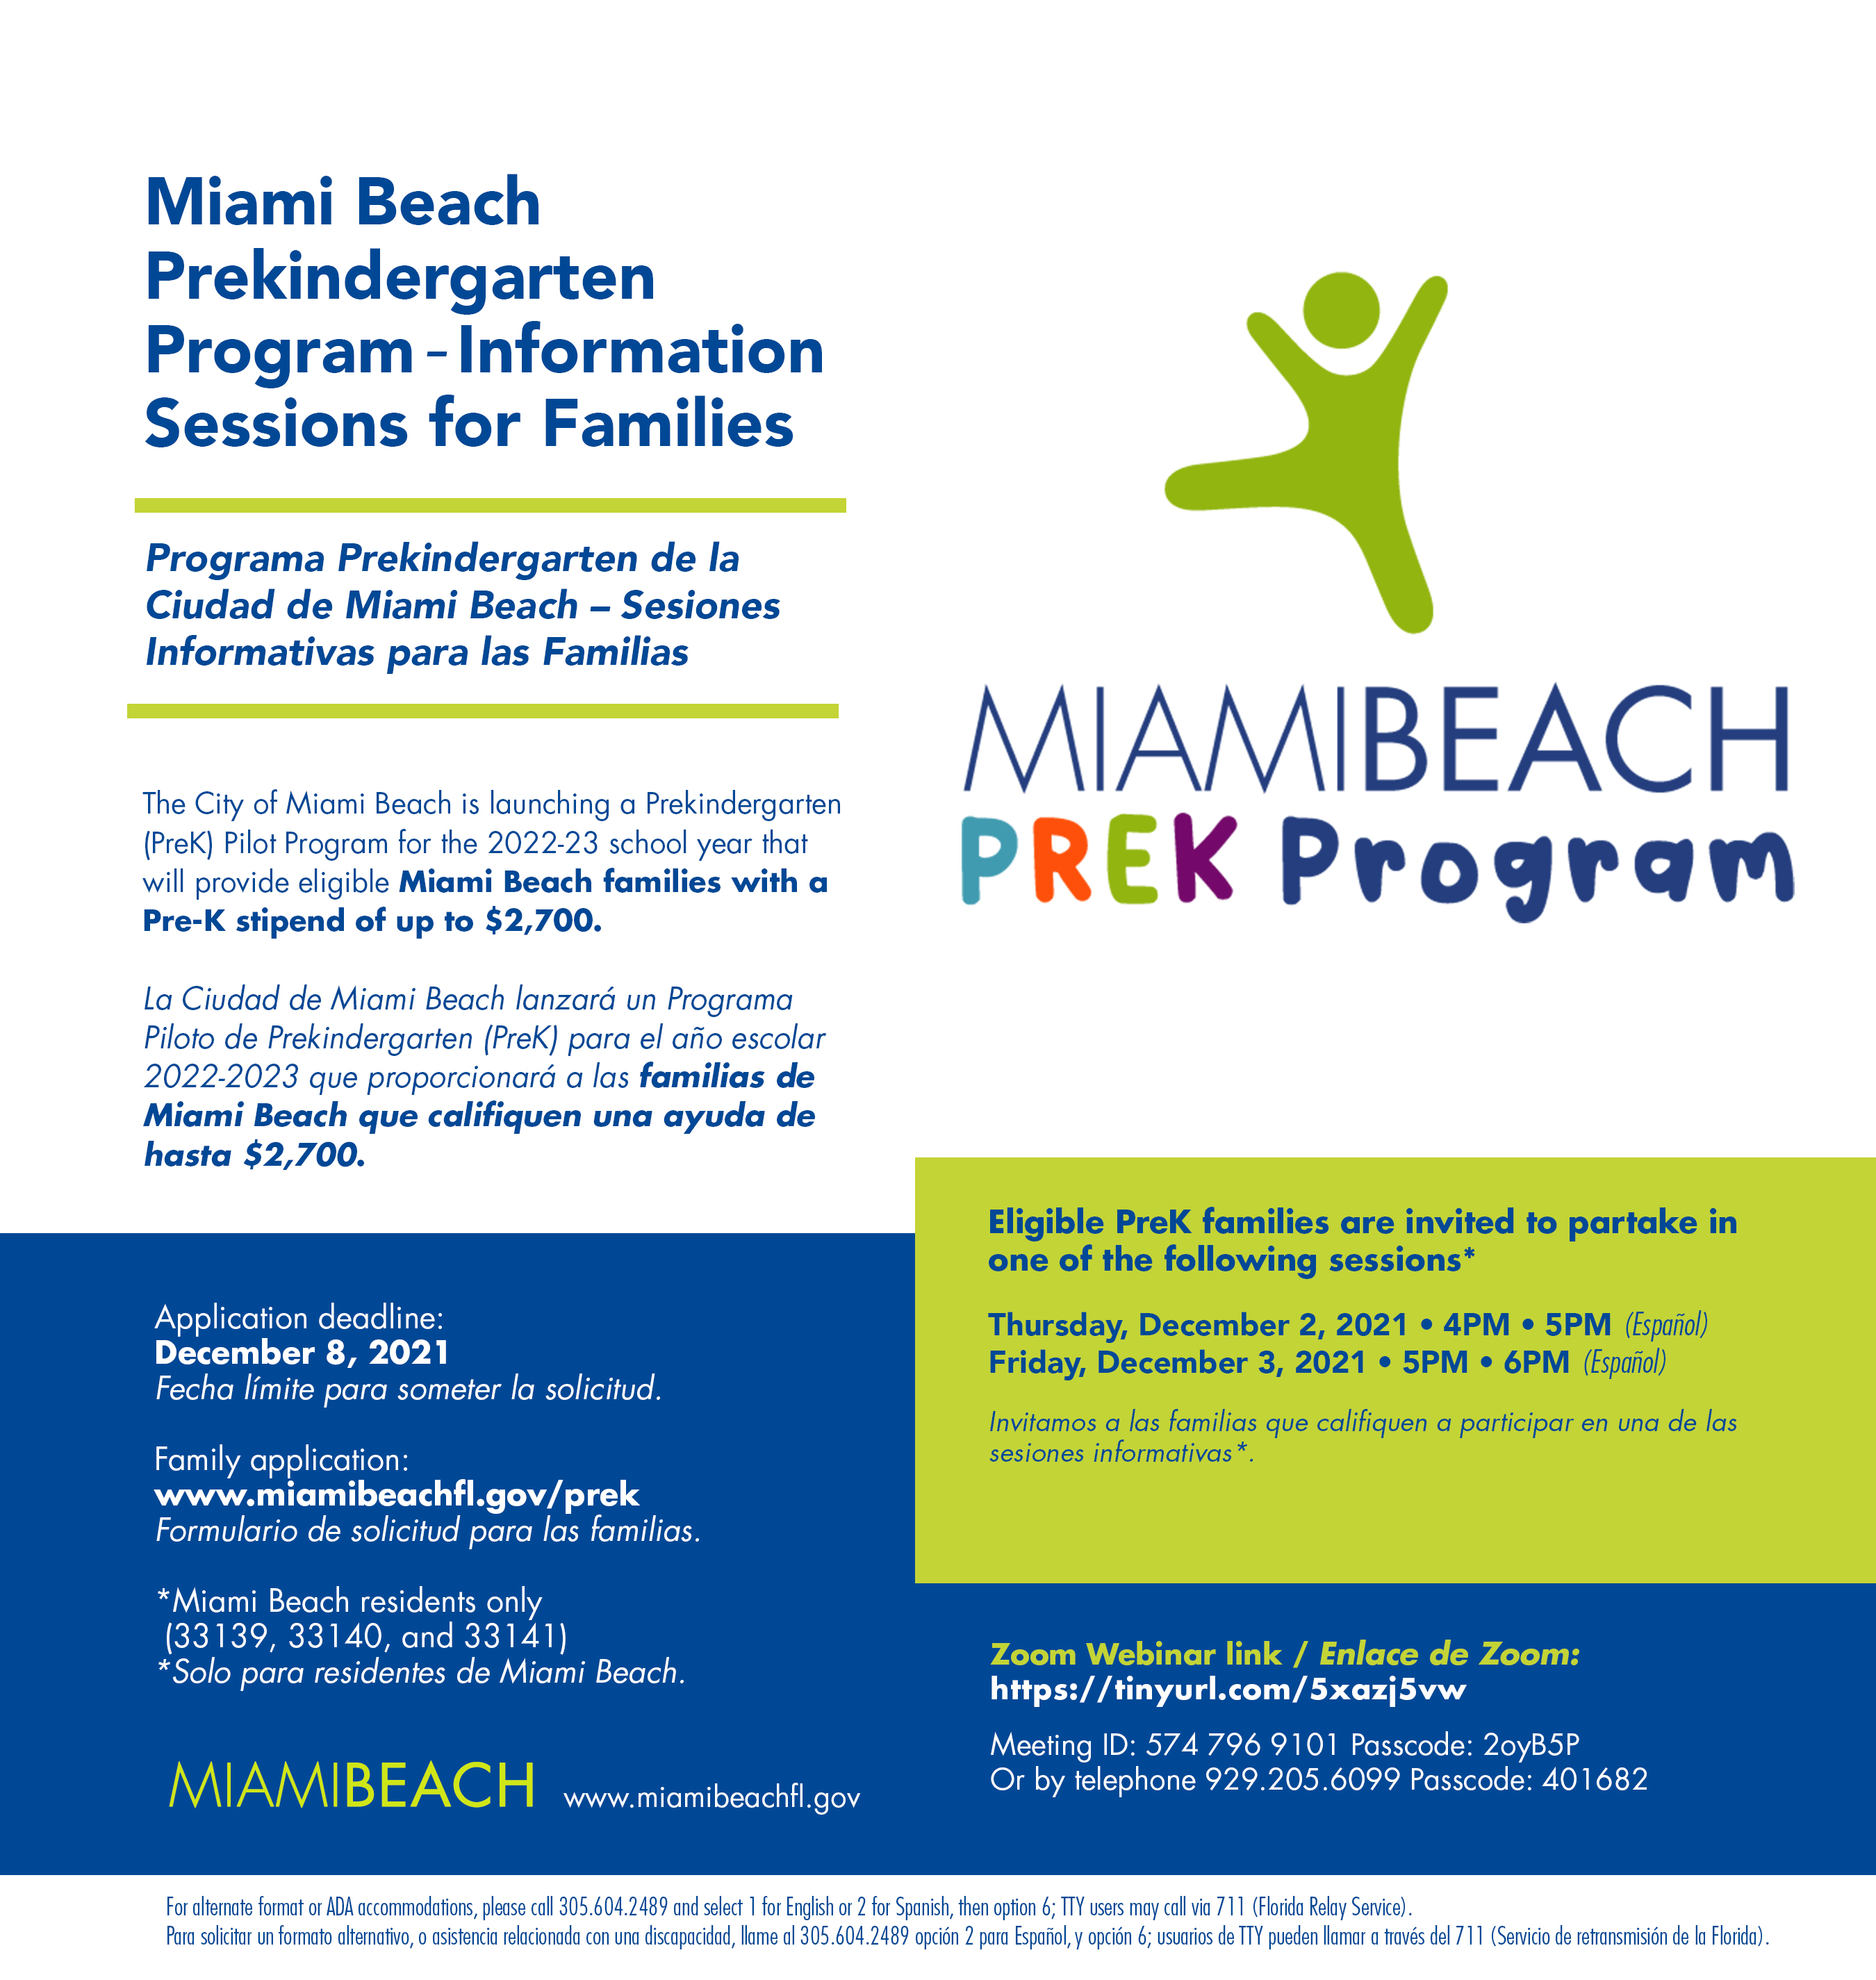 Miami Beach Prekindergarten Program / Information Sessions for Families